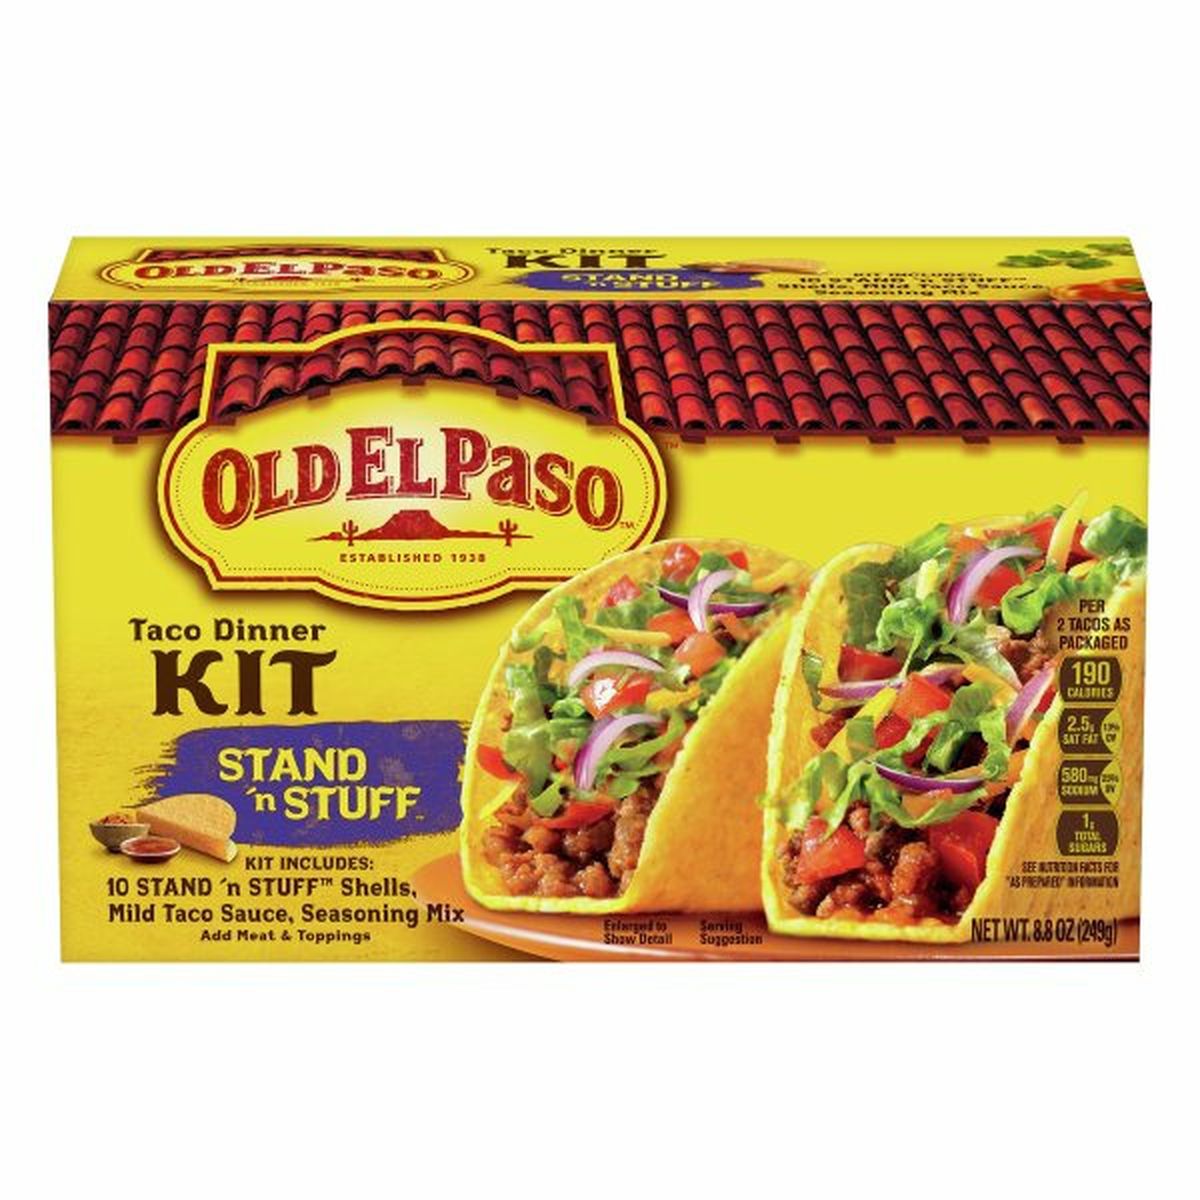 Calories in Old El Paso Taco Dinner Kit, Stand 'n Stuff